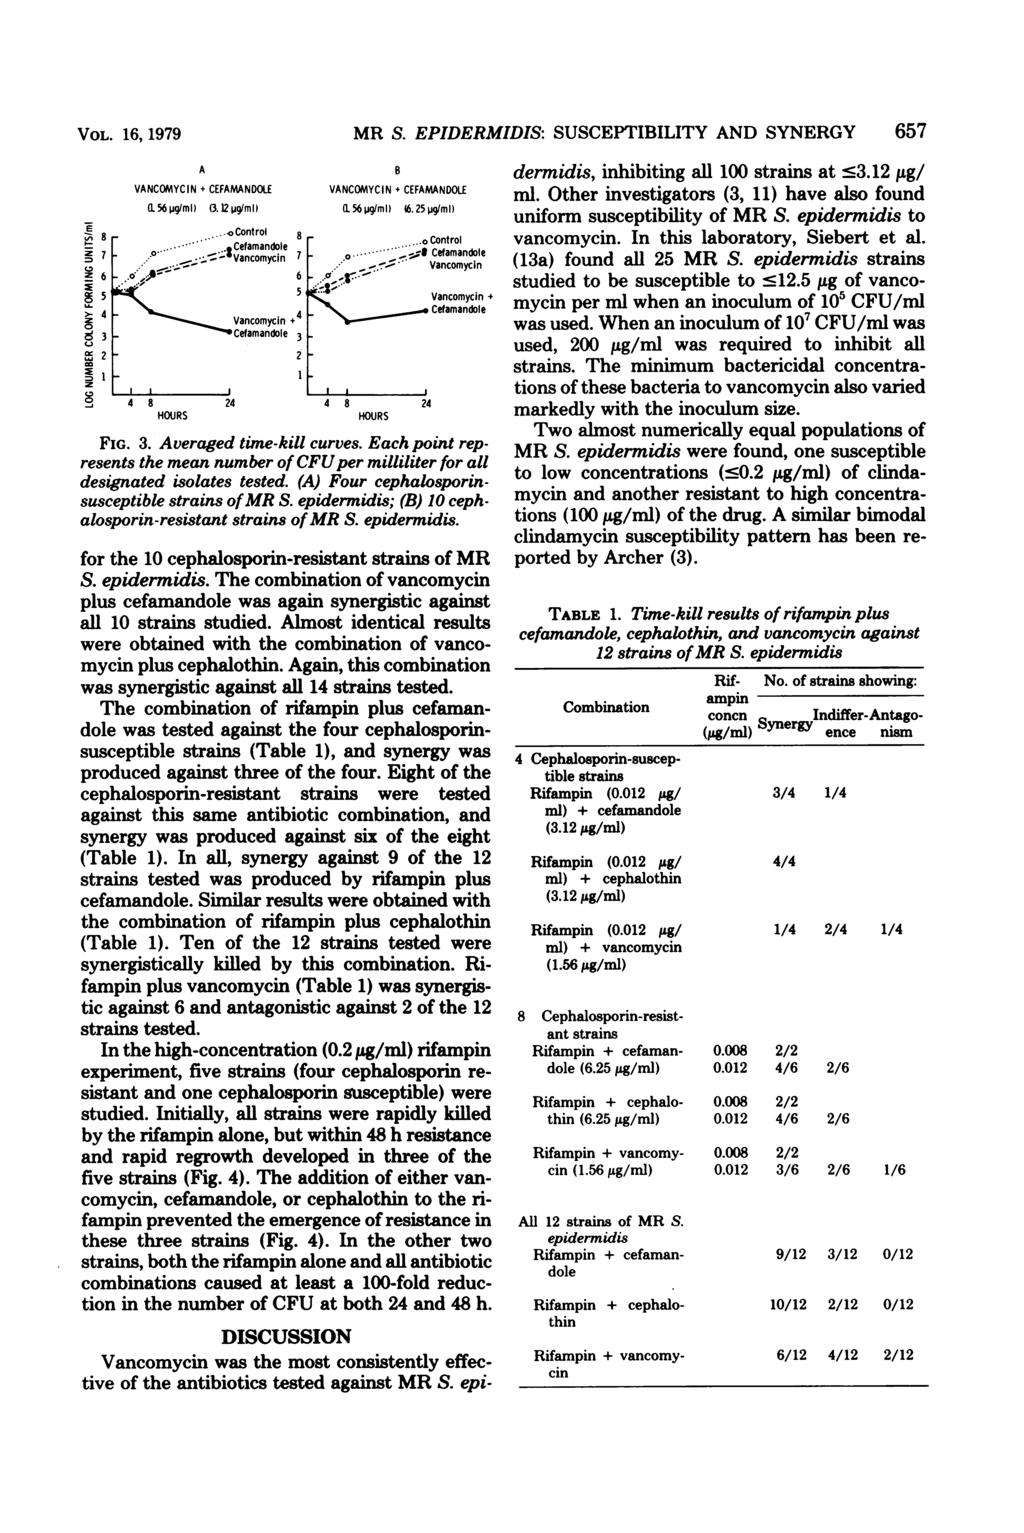 VOL. 16, 1979 A VANCOMYCIN + CEFAMANDOLE 8.56pg/ml) (3.12pgiml.;8 z 7 Z6 g 5-4 z o 3 co.2 ax z =I 8 4 8 24 MR S. EPIDERMIDIS: SUSCEPTIBILITY AND SYNERGY 657 B VANCOMYCIN + CEFAMANDOLE (156ig/mIl) (6.